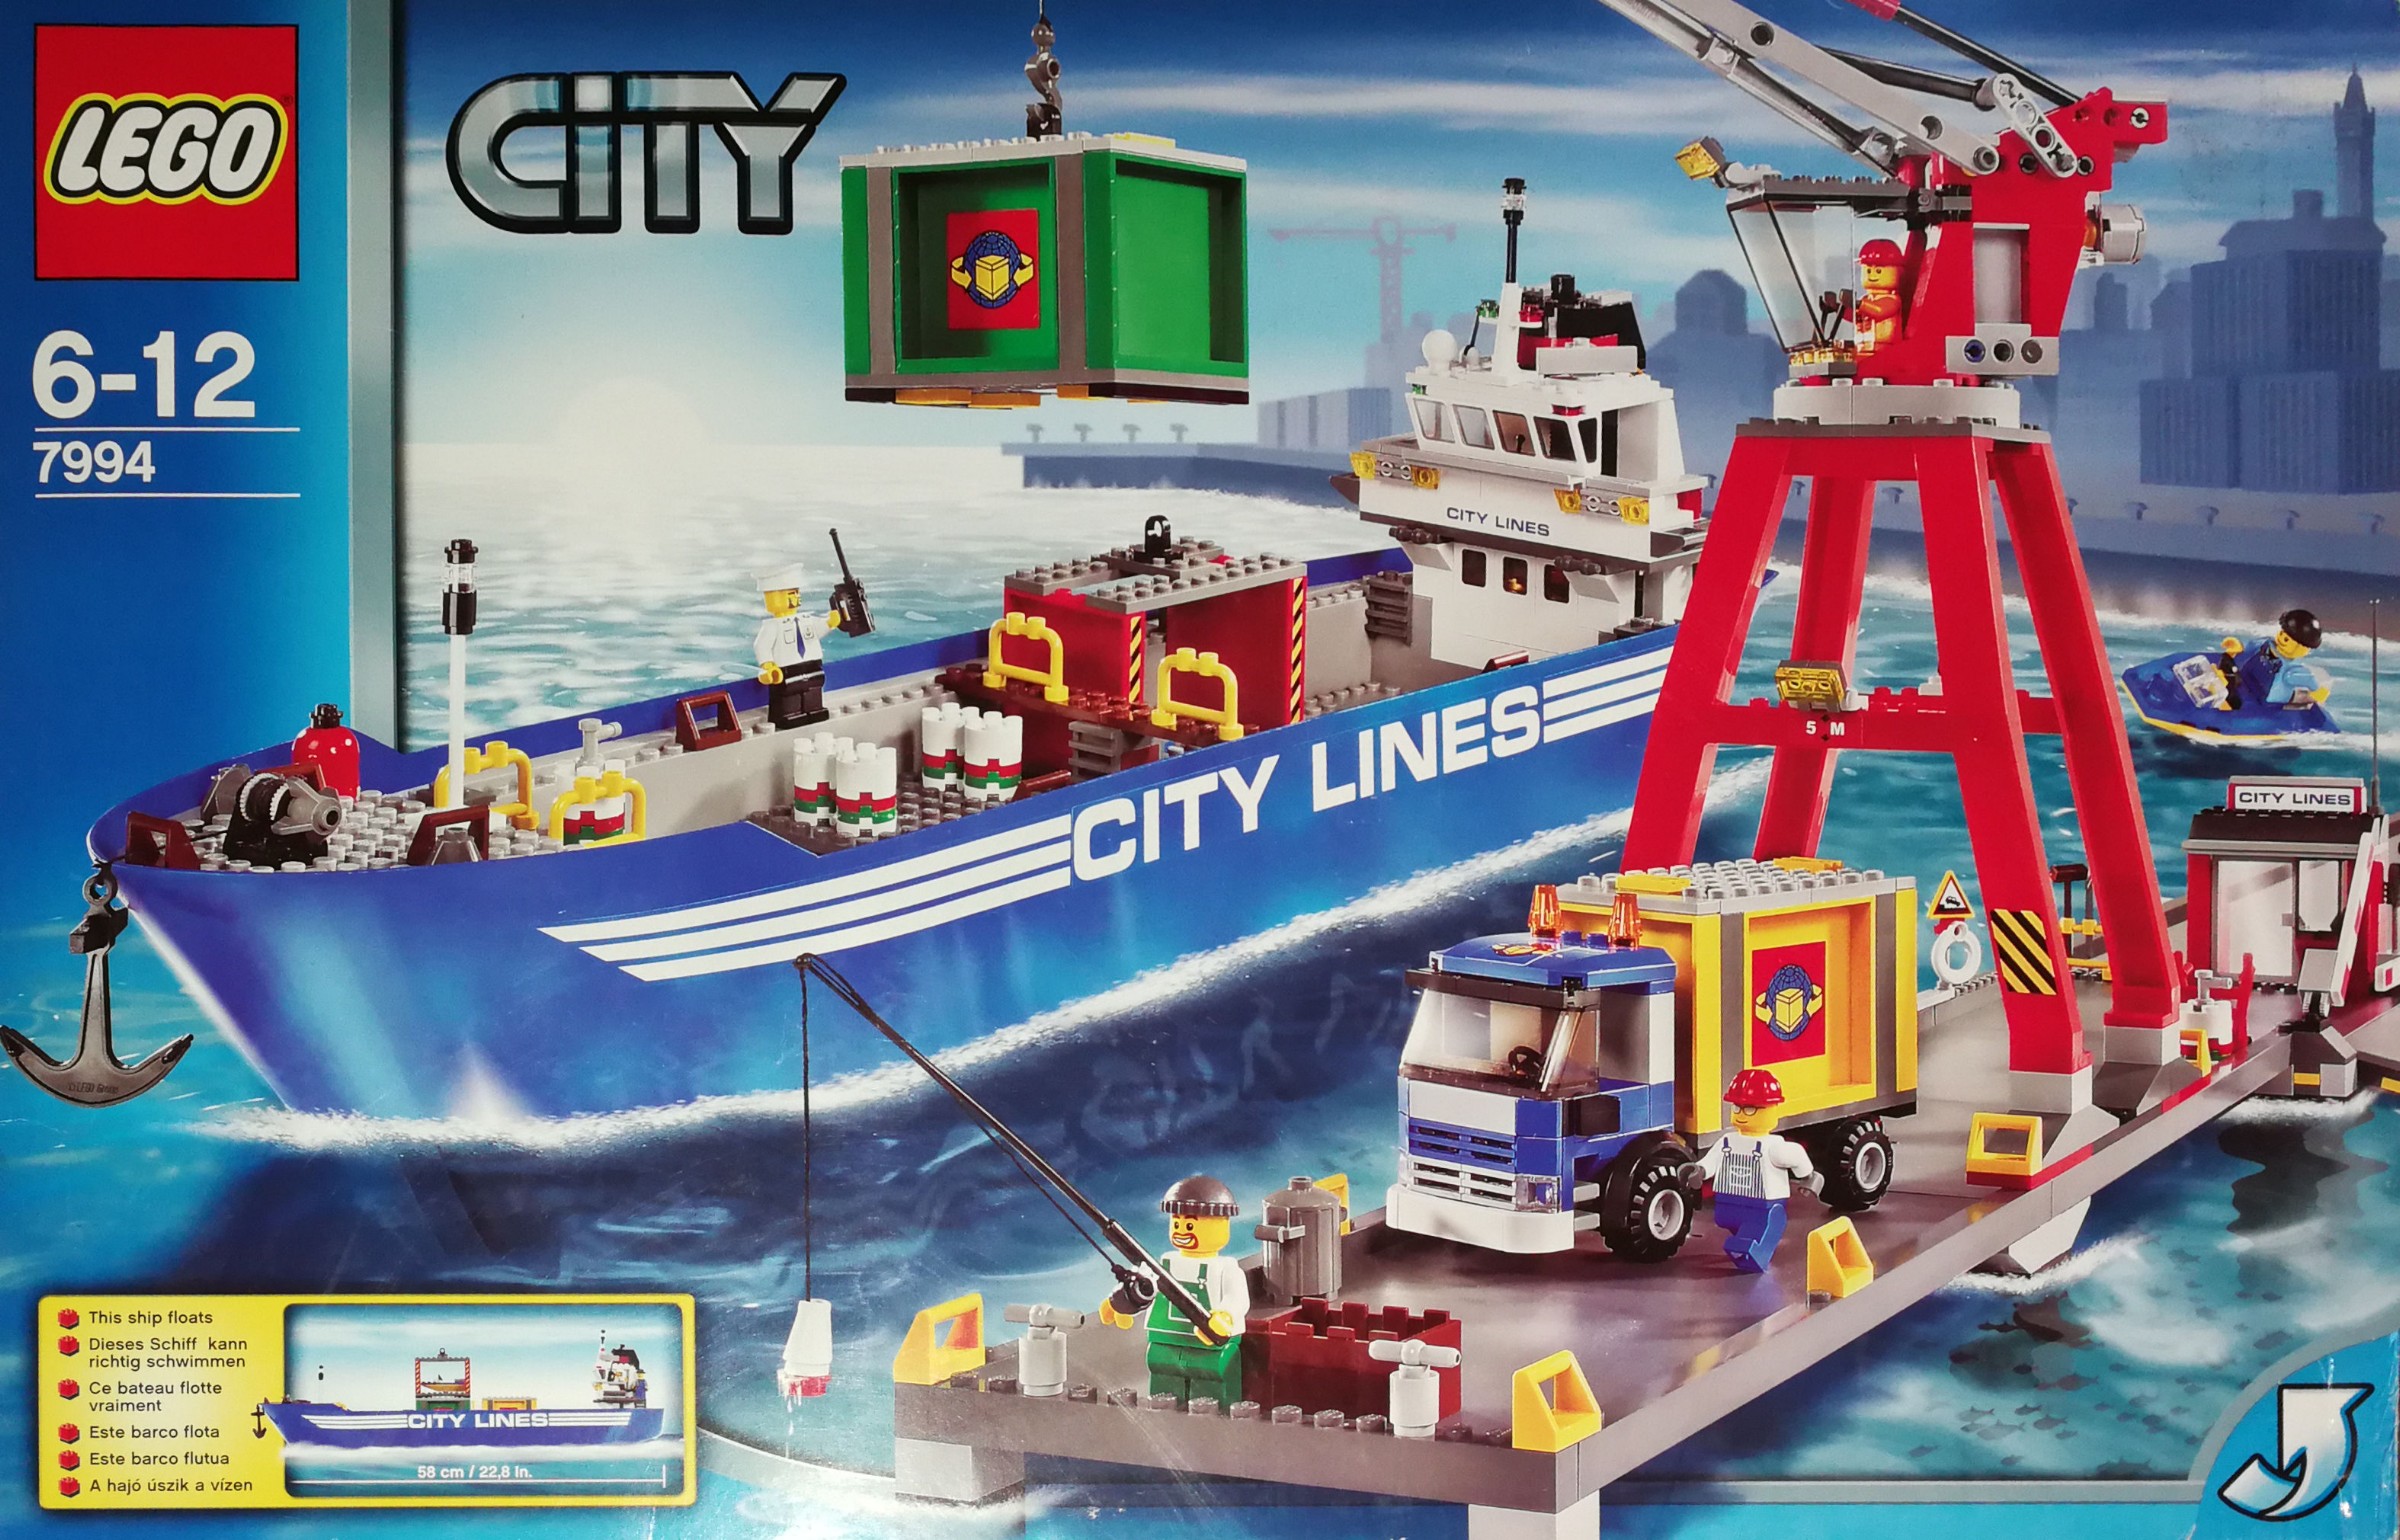 lego city boat